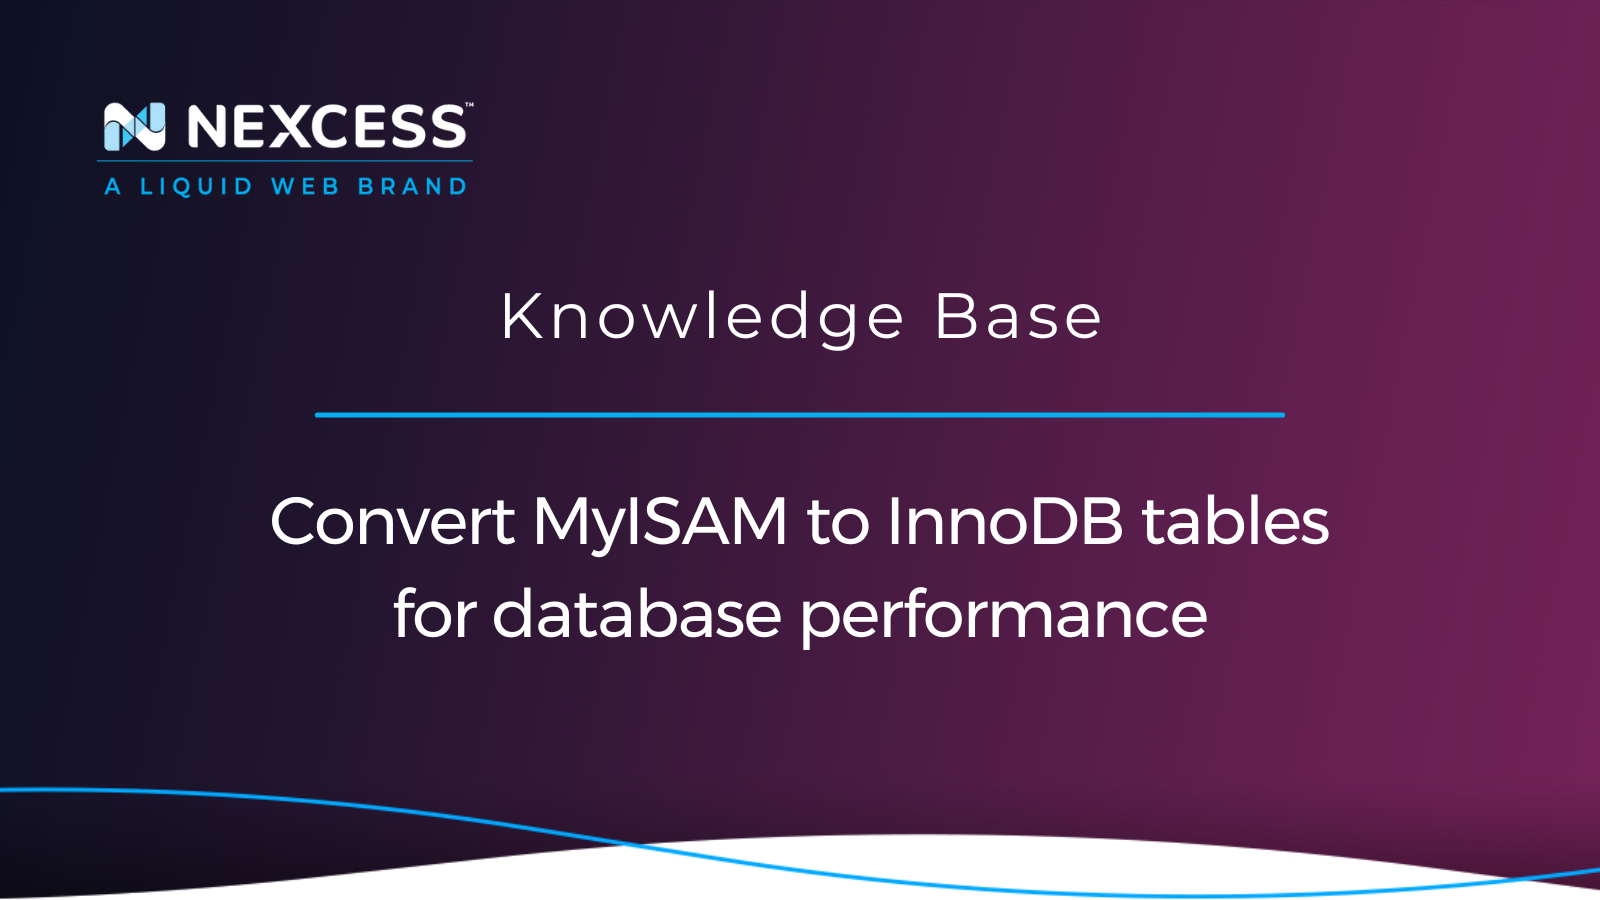 Convert MyISAM to InnoDB tables for database performance